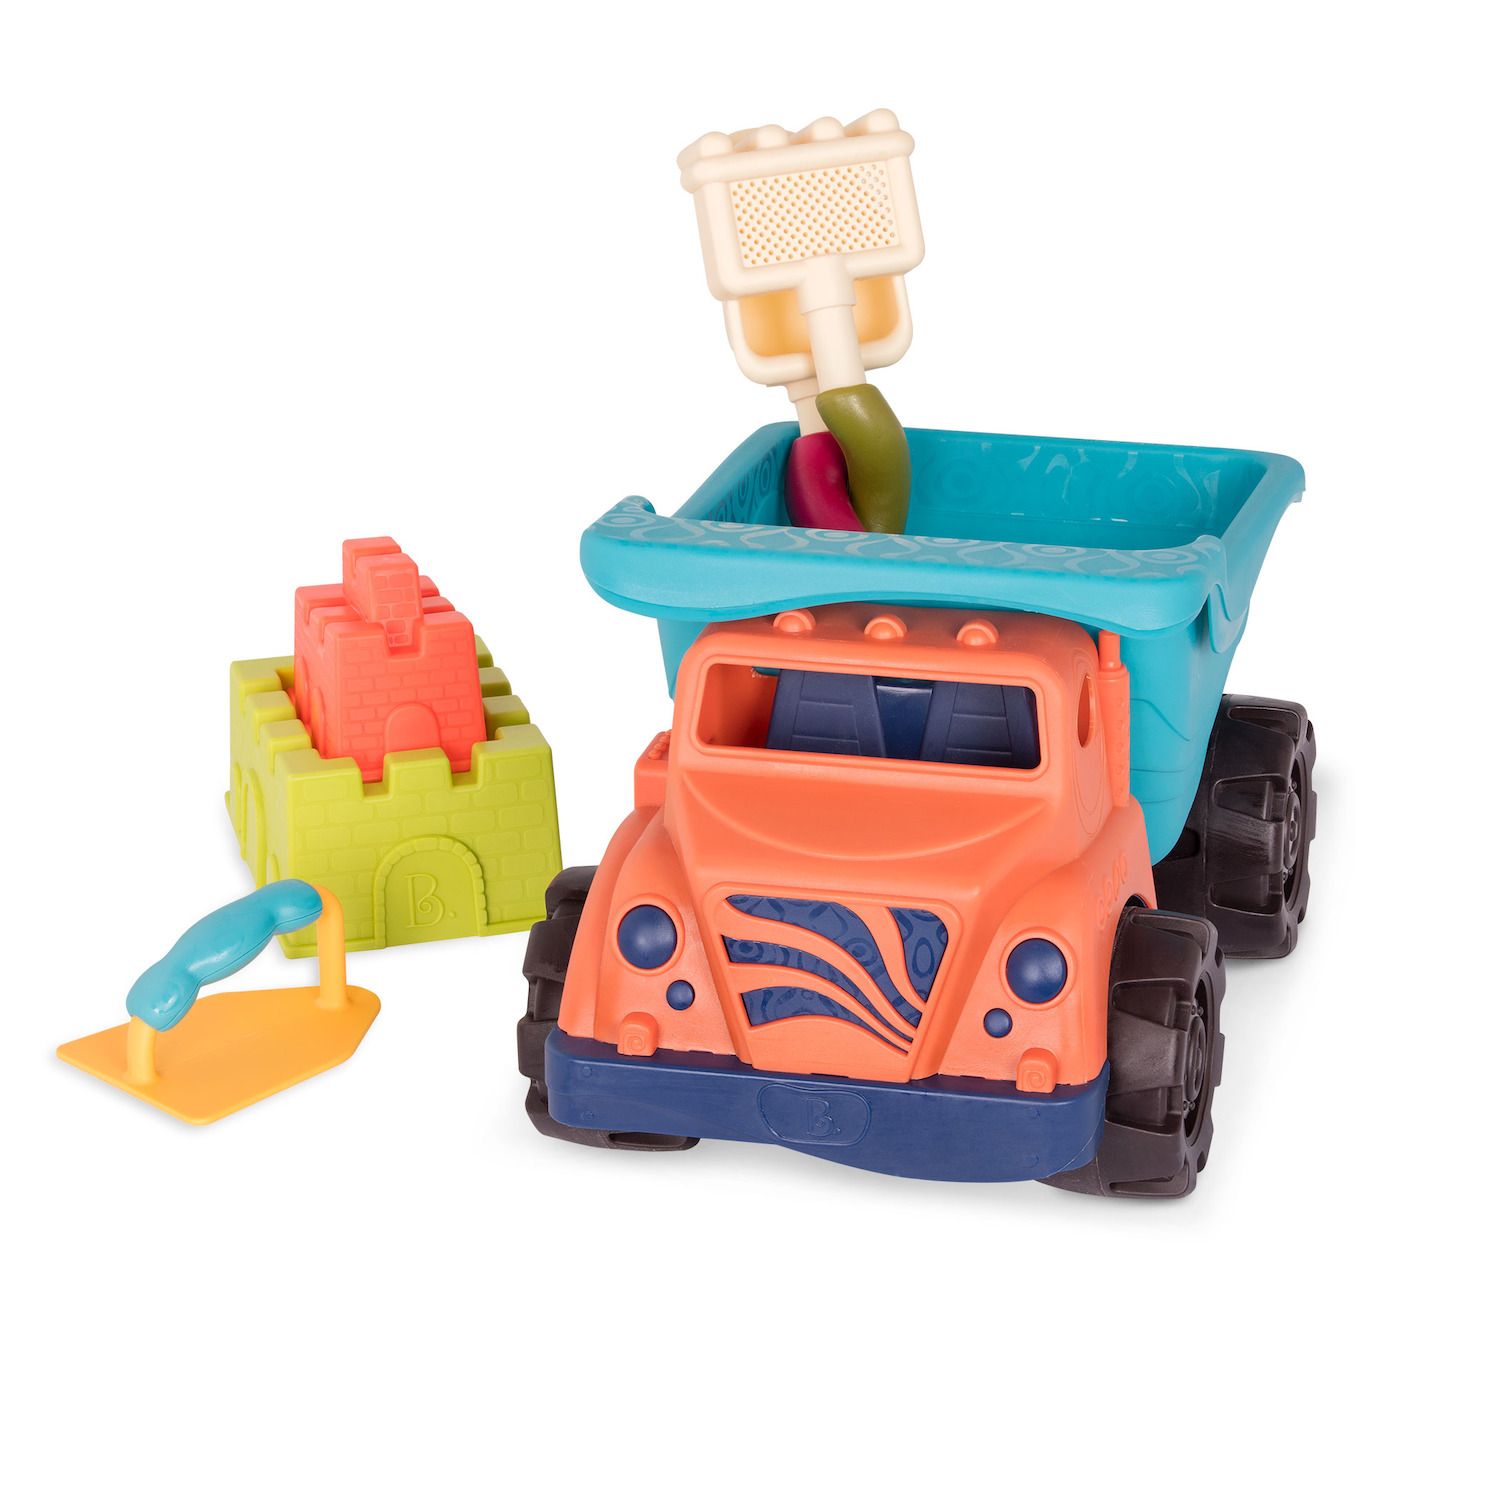 Toys 113.510,1 cm Beach Wagon Blue Beach Toy Set B